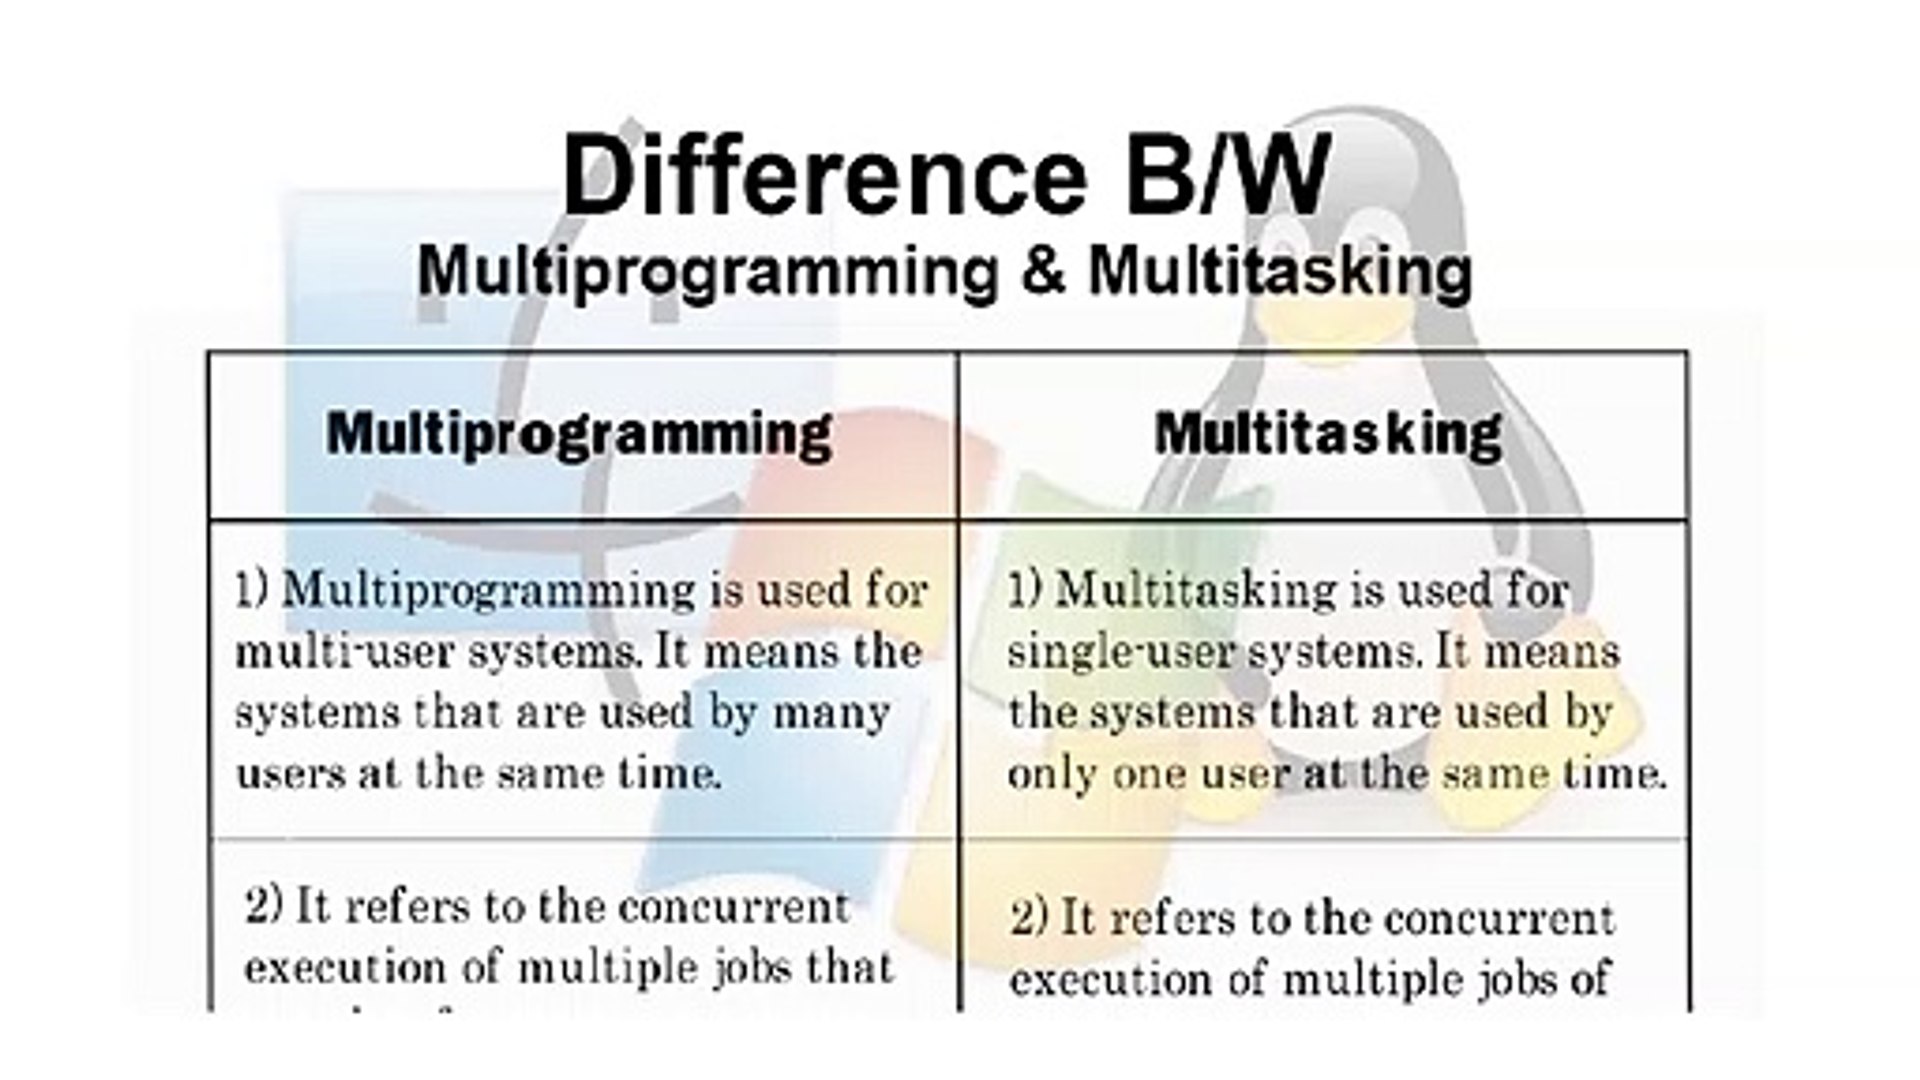 multiprogramming operating system